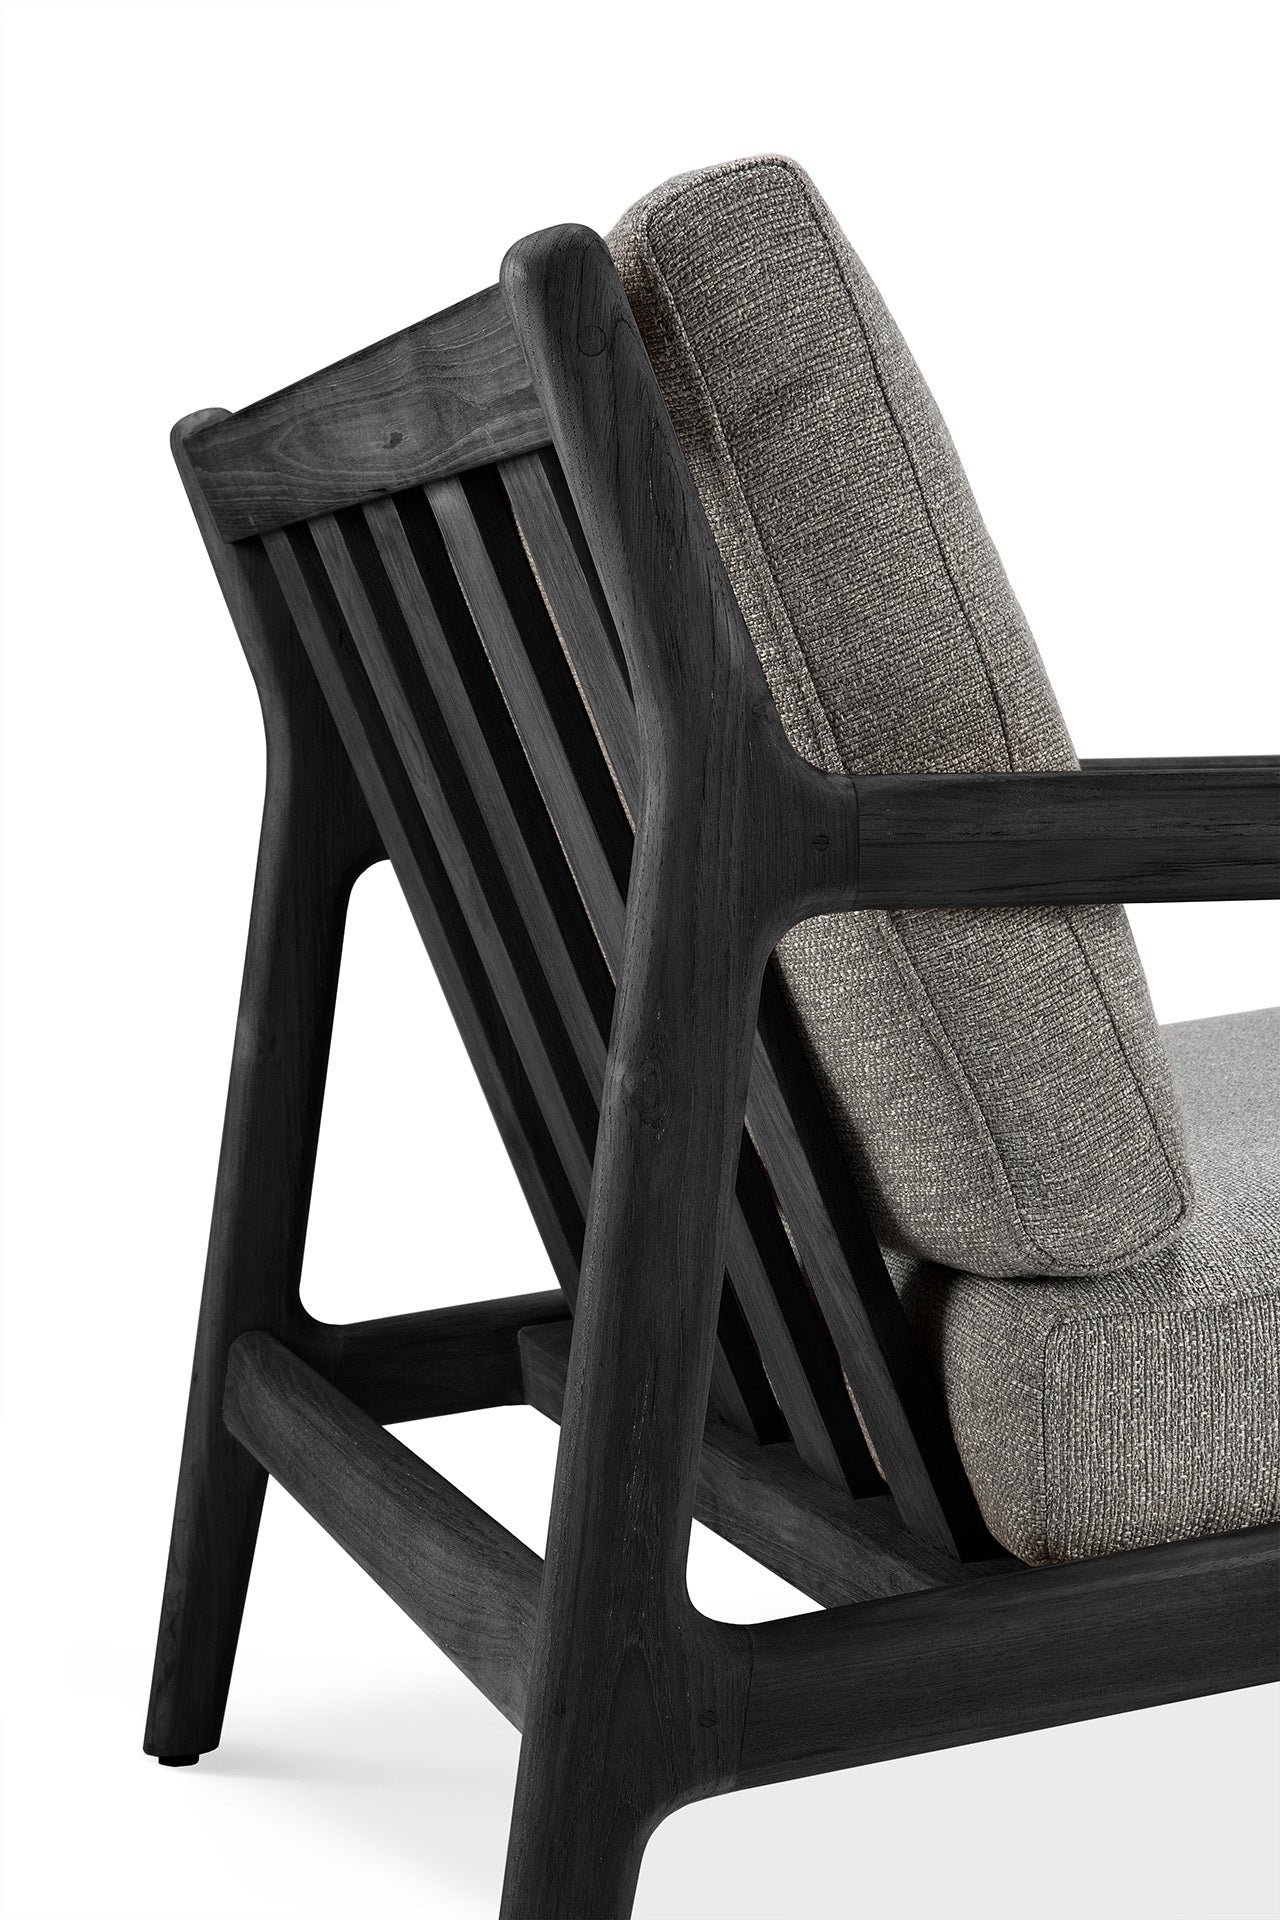 Jack Solid Black Teak Outdoor Lounge Chair, Mocha Fabric